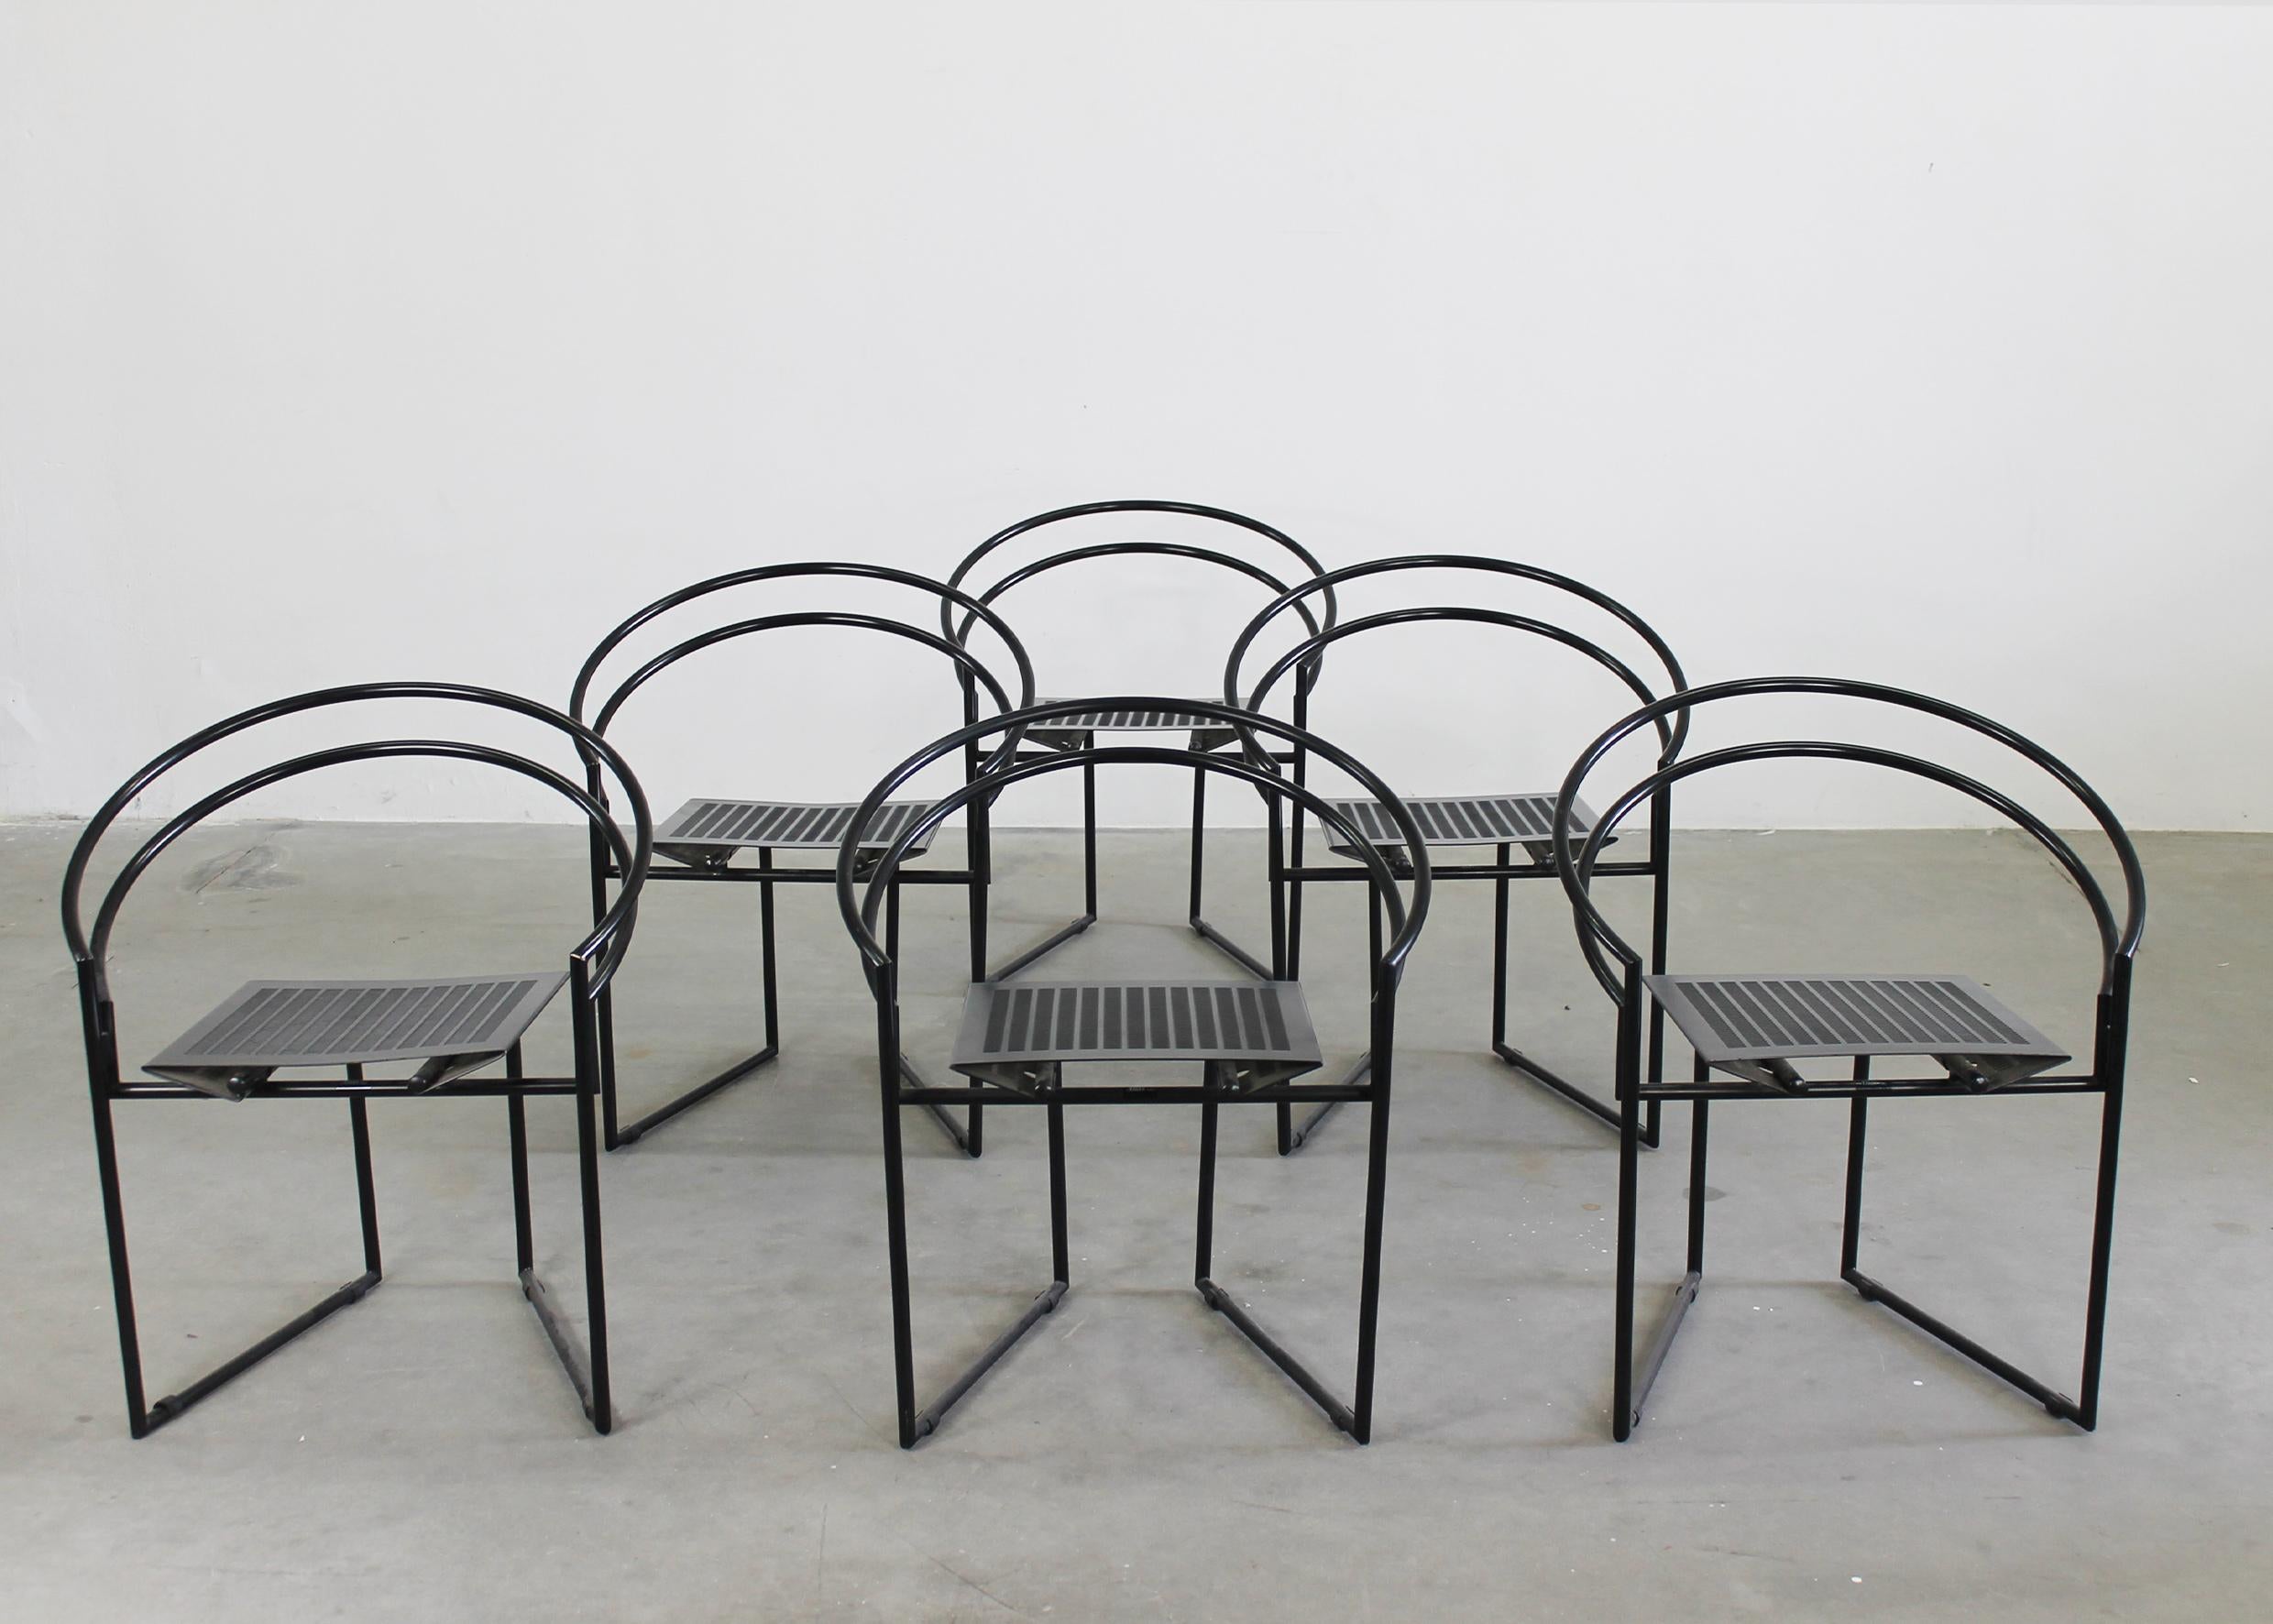 Italian Mario Botta Set of Six La Tonda Chairs in Black Lacquered Metal by Alias 1980s For Sale